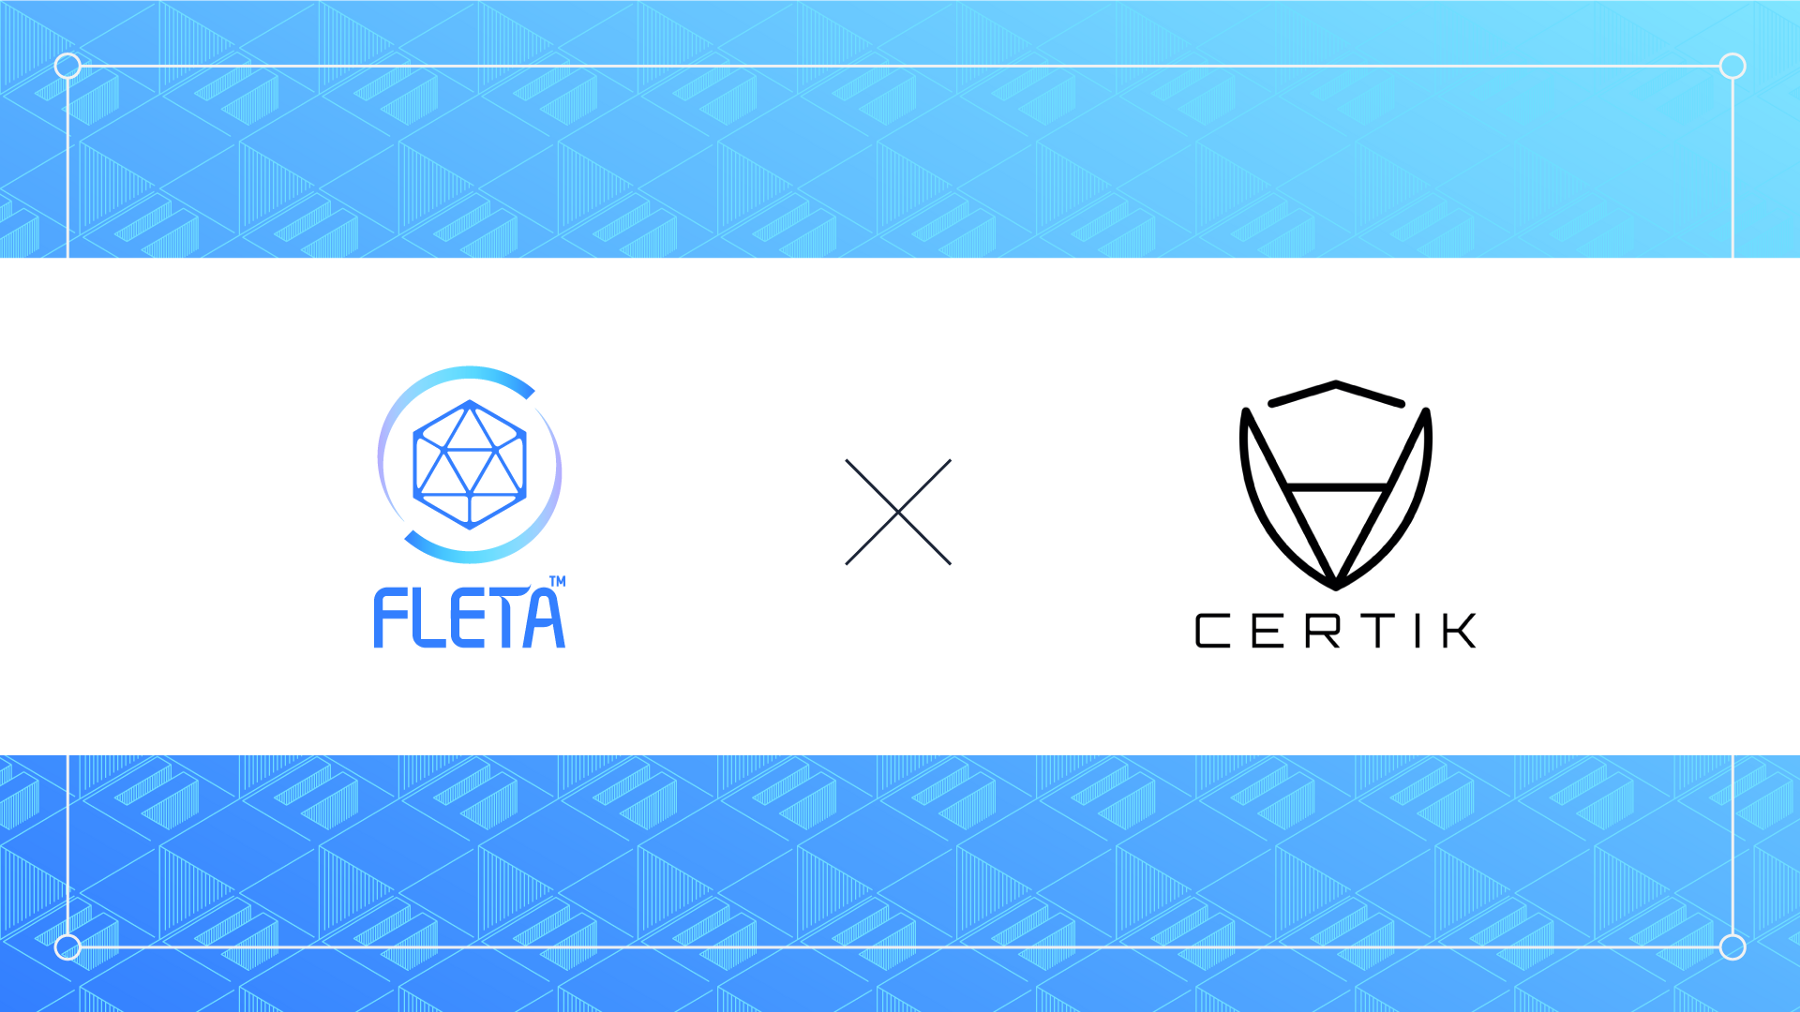 CertiK has conducted verification of FLETA’s smart contract